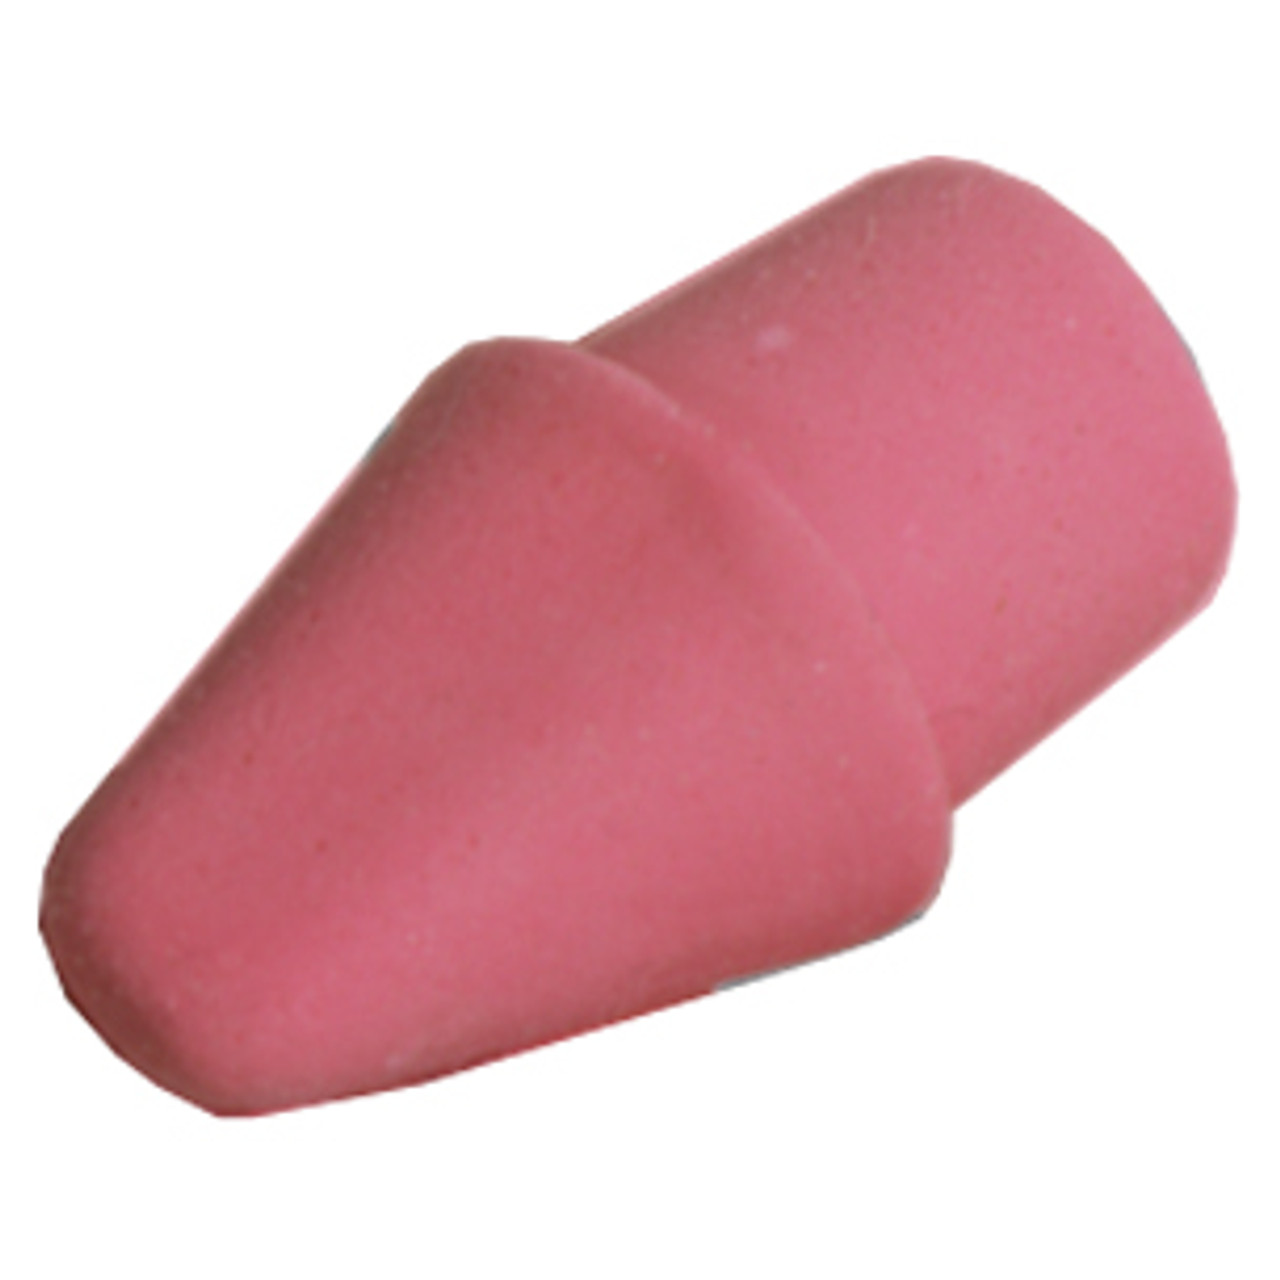 Arrowhead Pink Eraser Cap